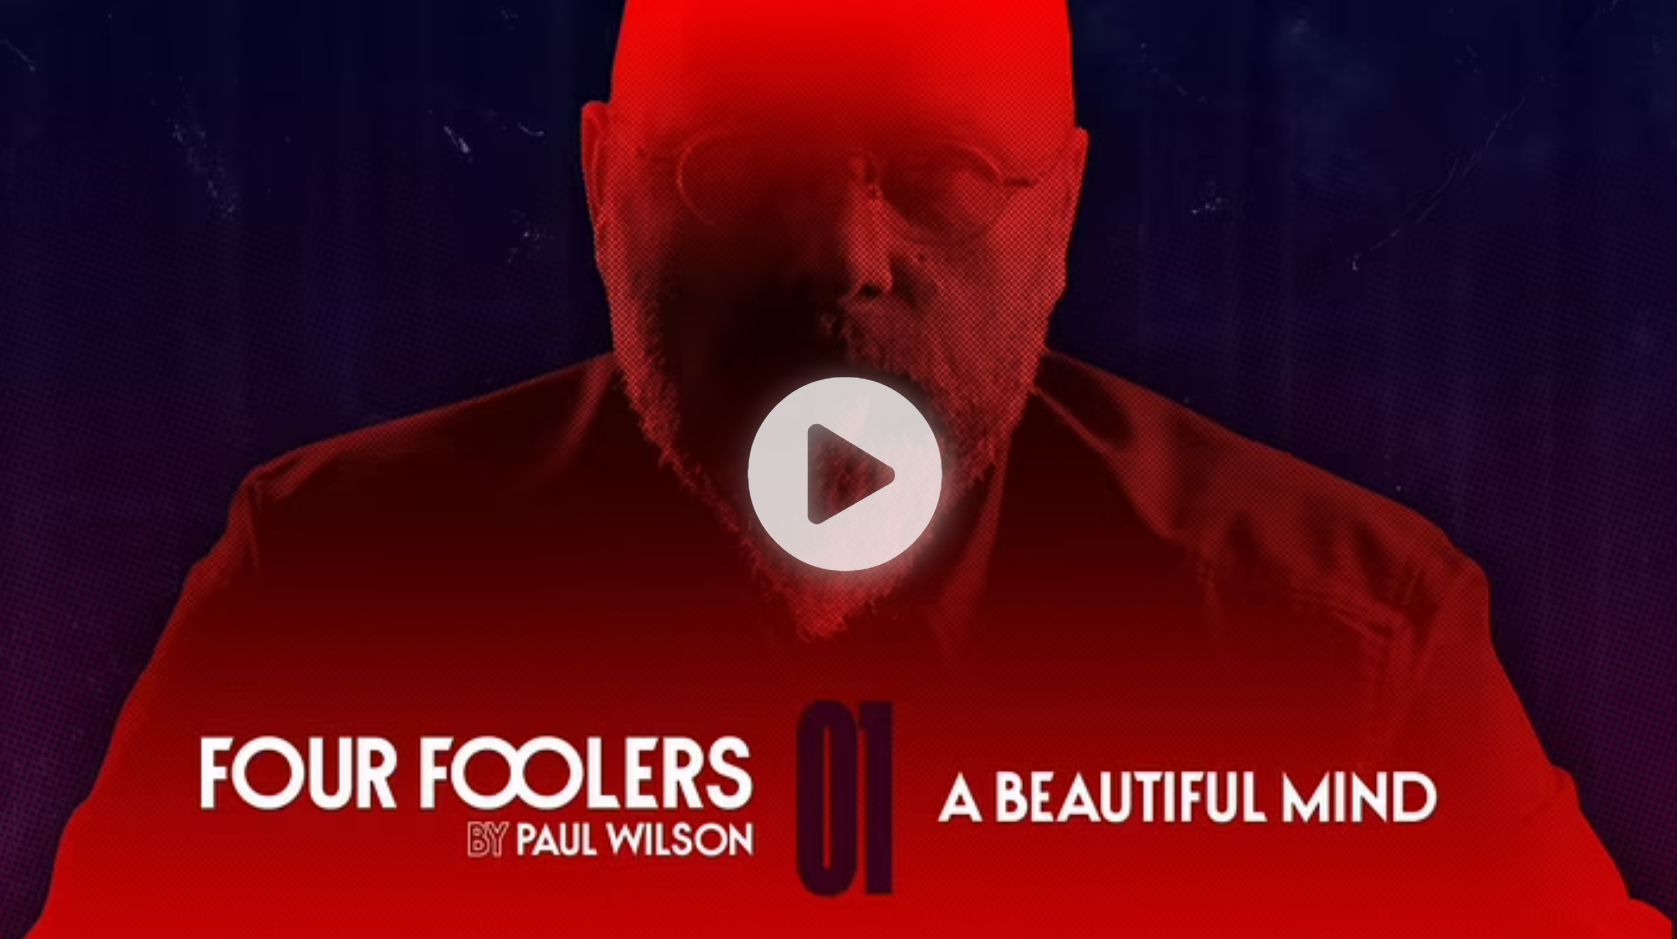 Paul Wilson - A Beautiful Mind